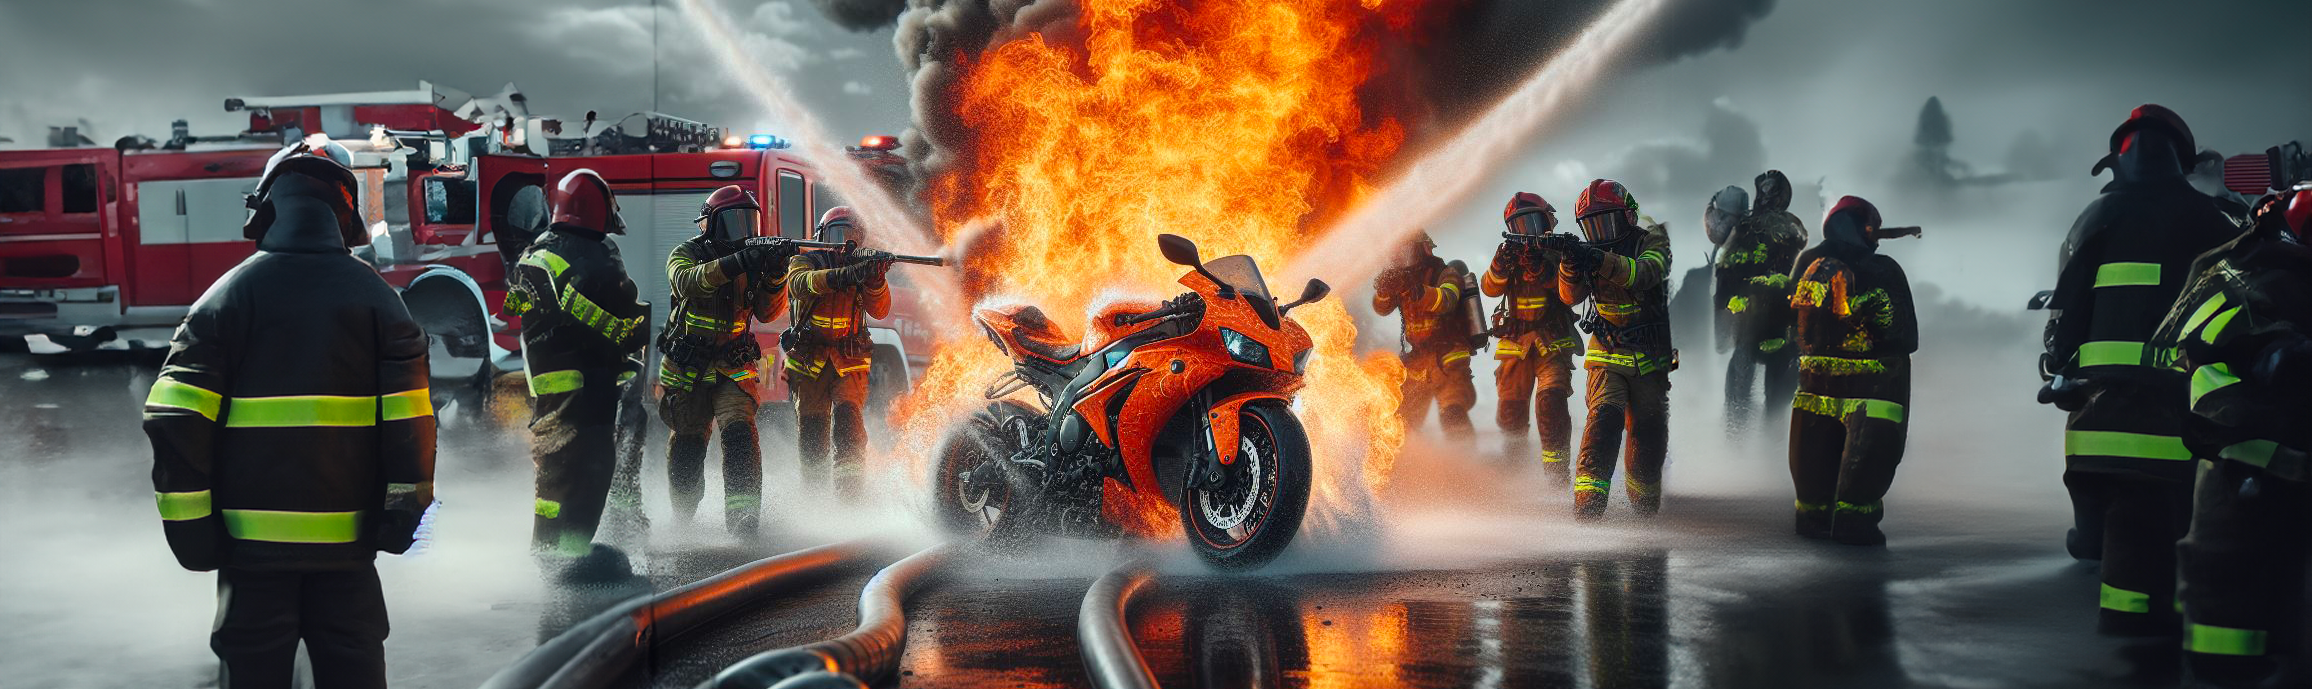 Assurance moto incendie